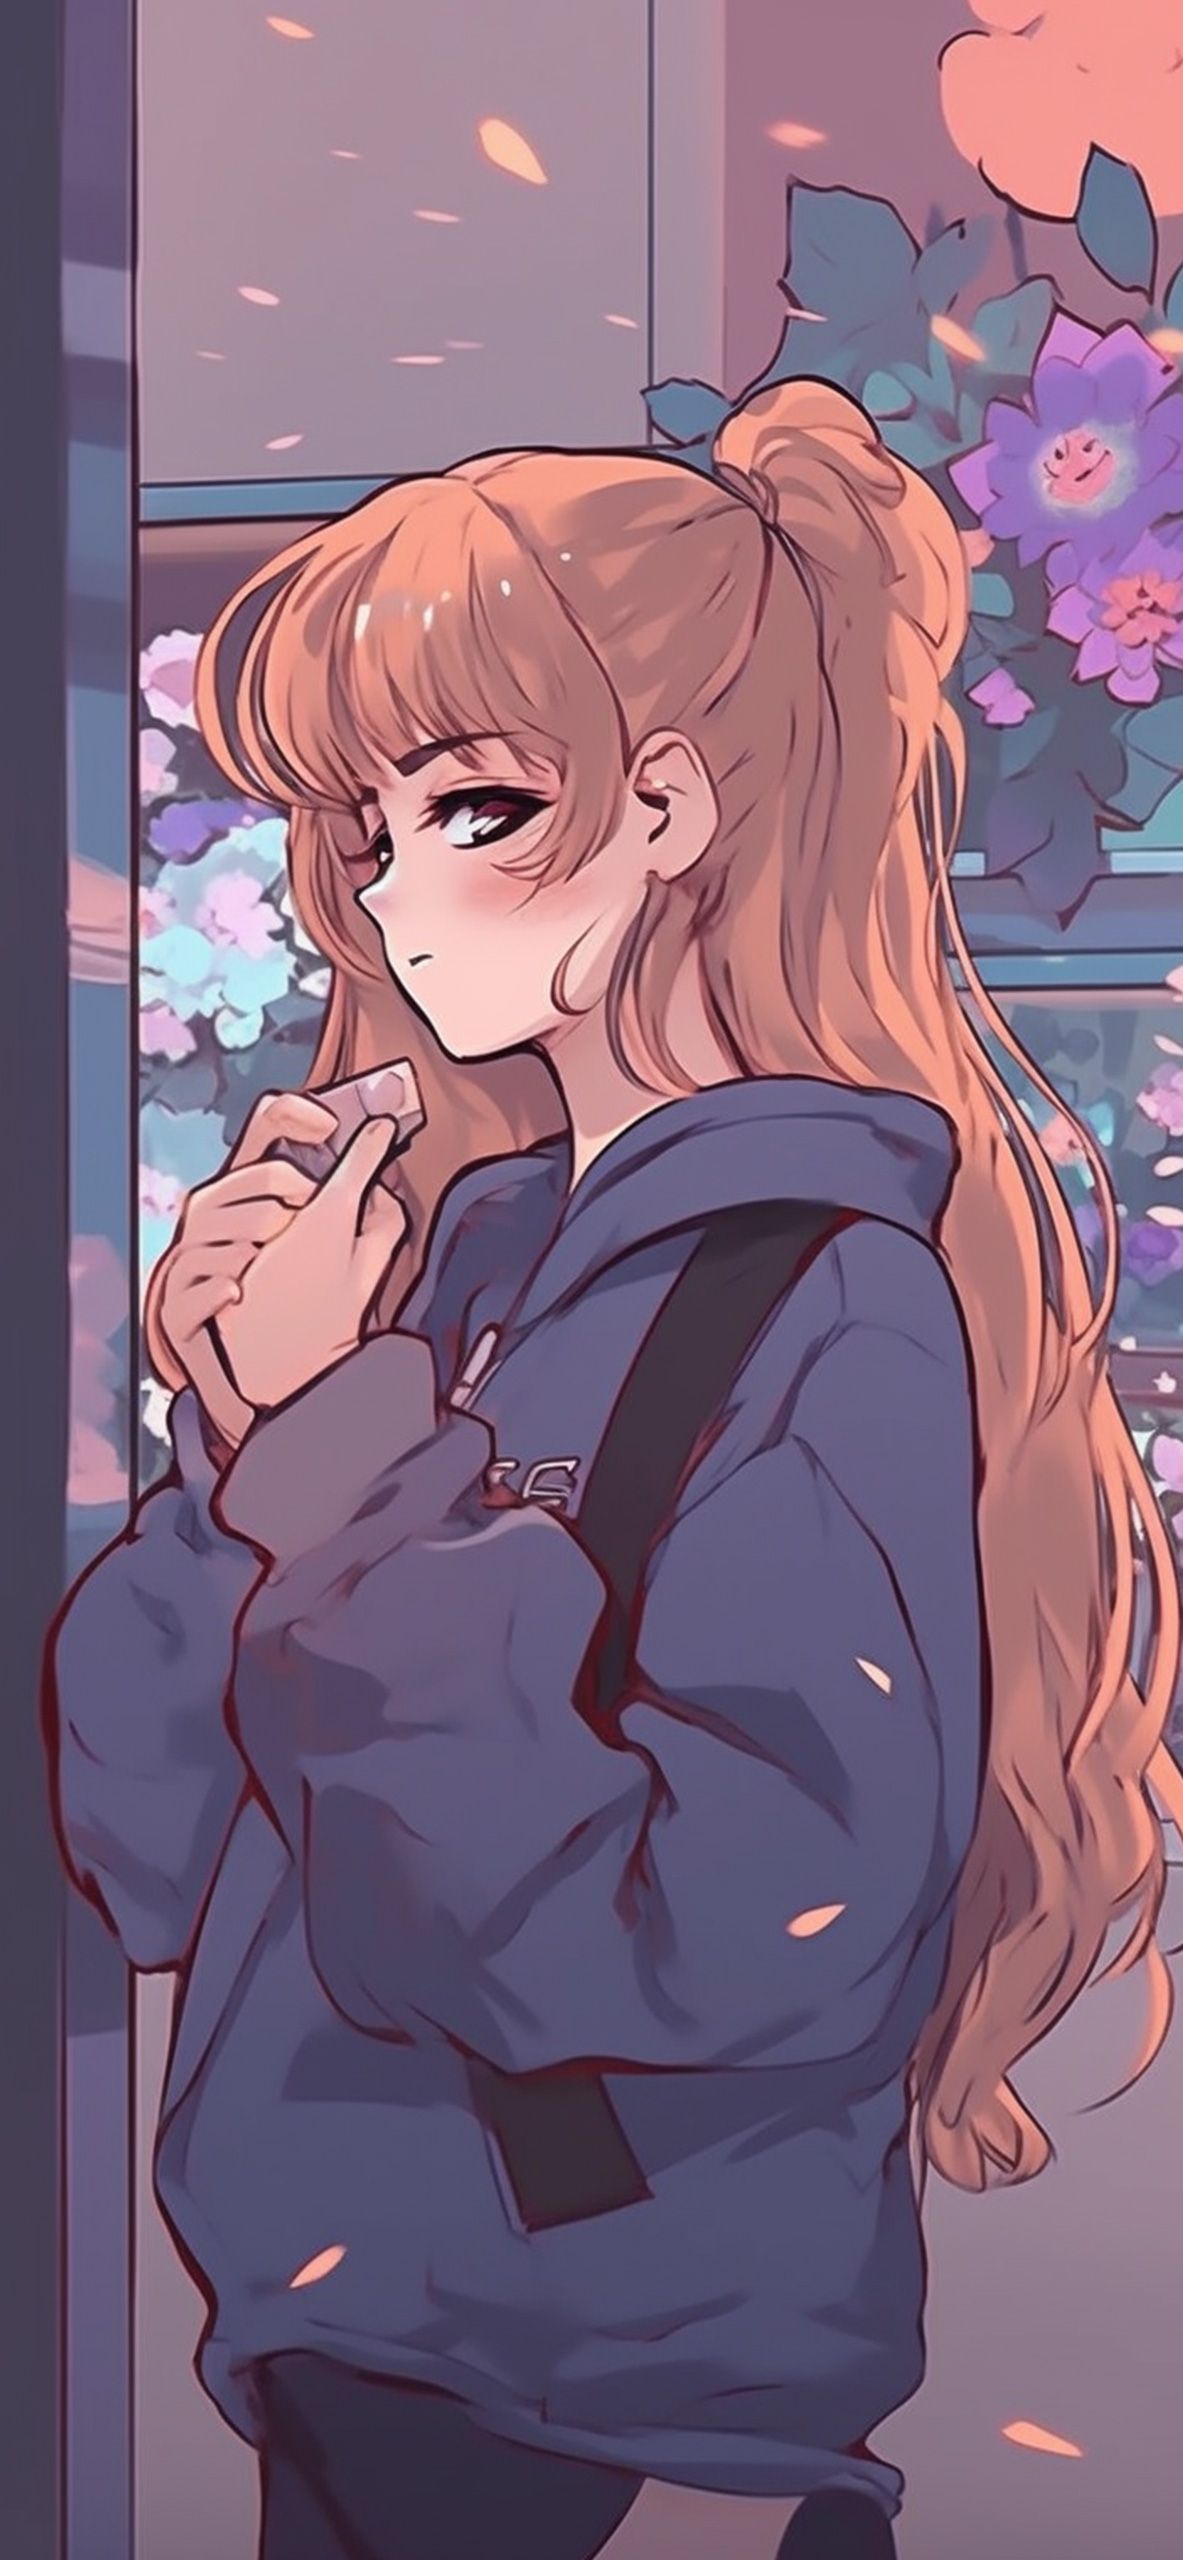 Aesthetic anime girl with brown hair and blue jacket - Anime girl